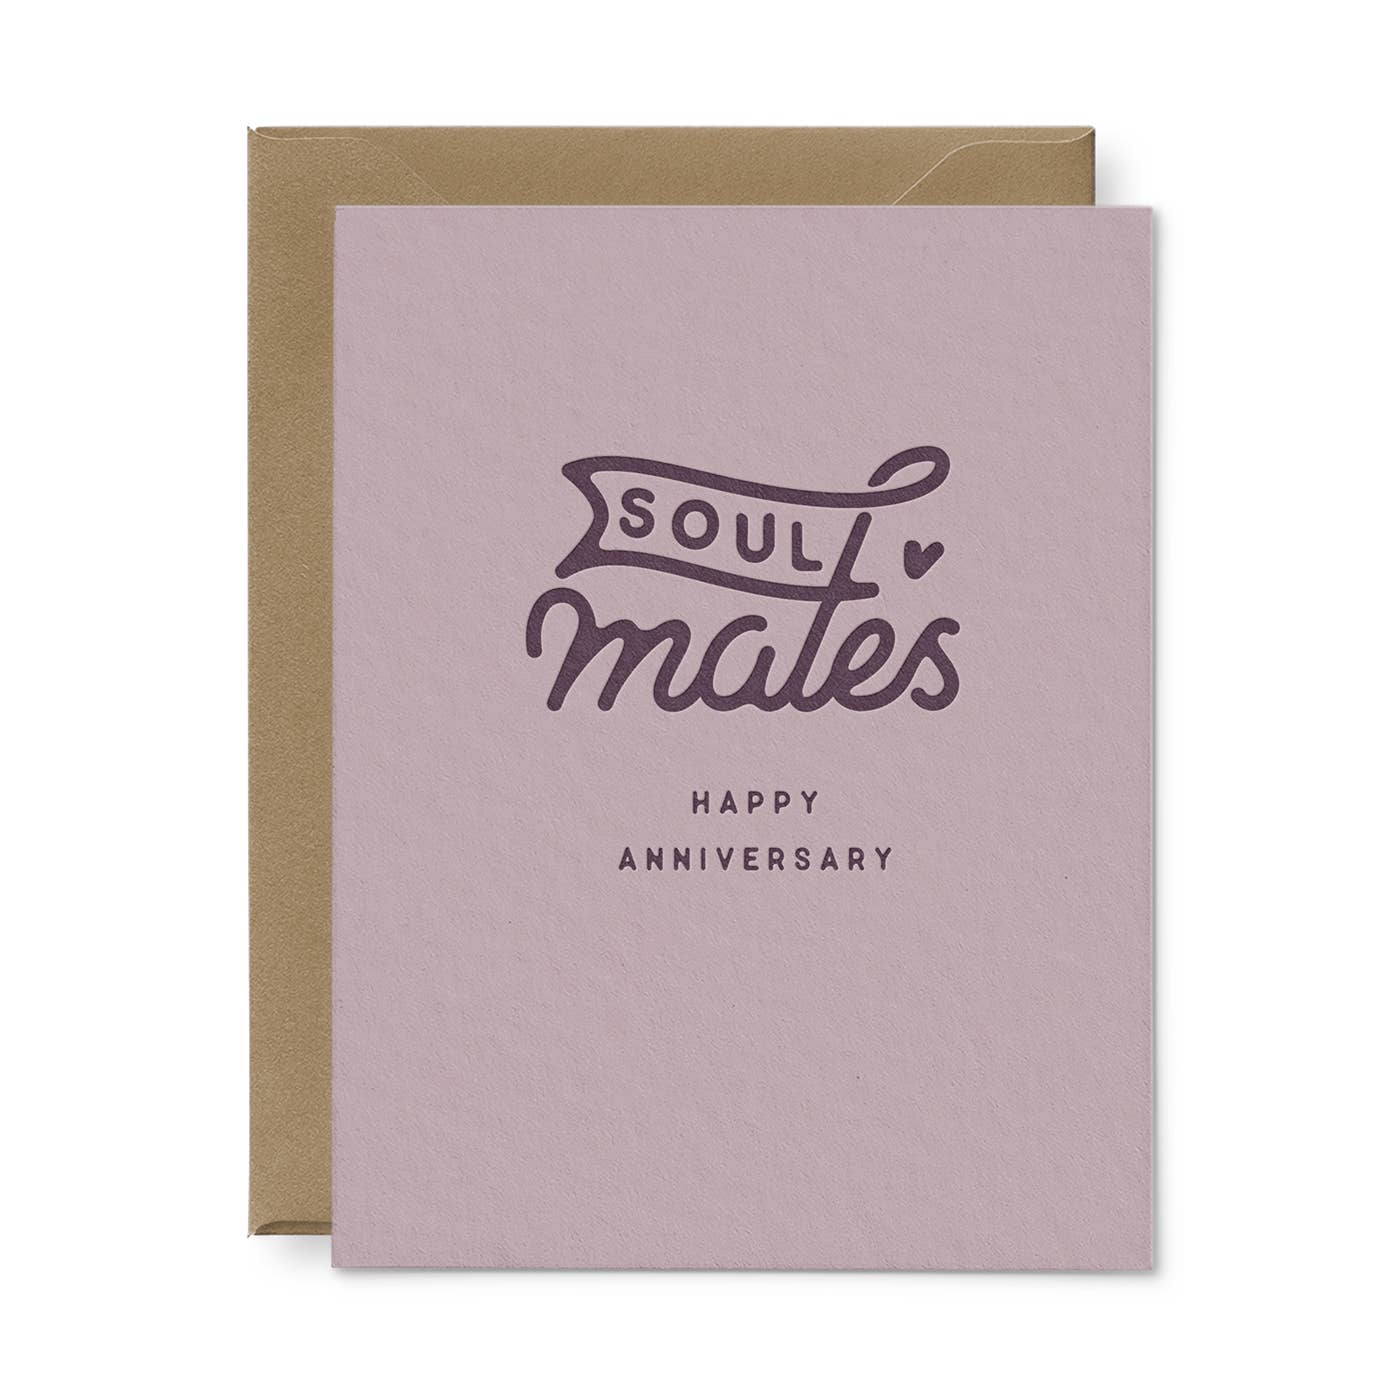 Soul Mates Happy Anniversary Card